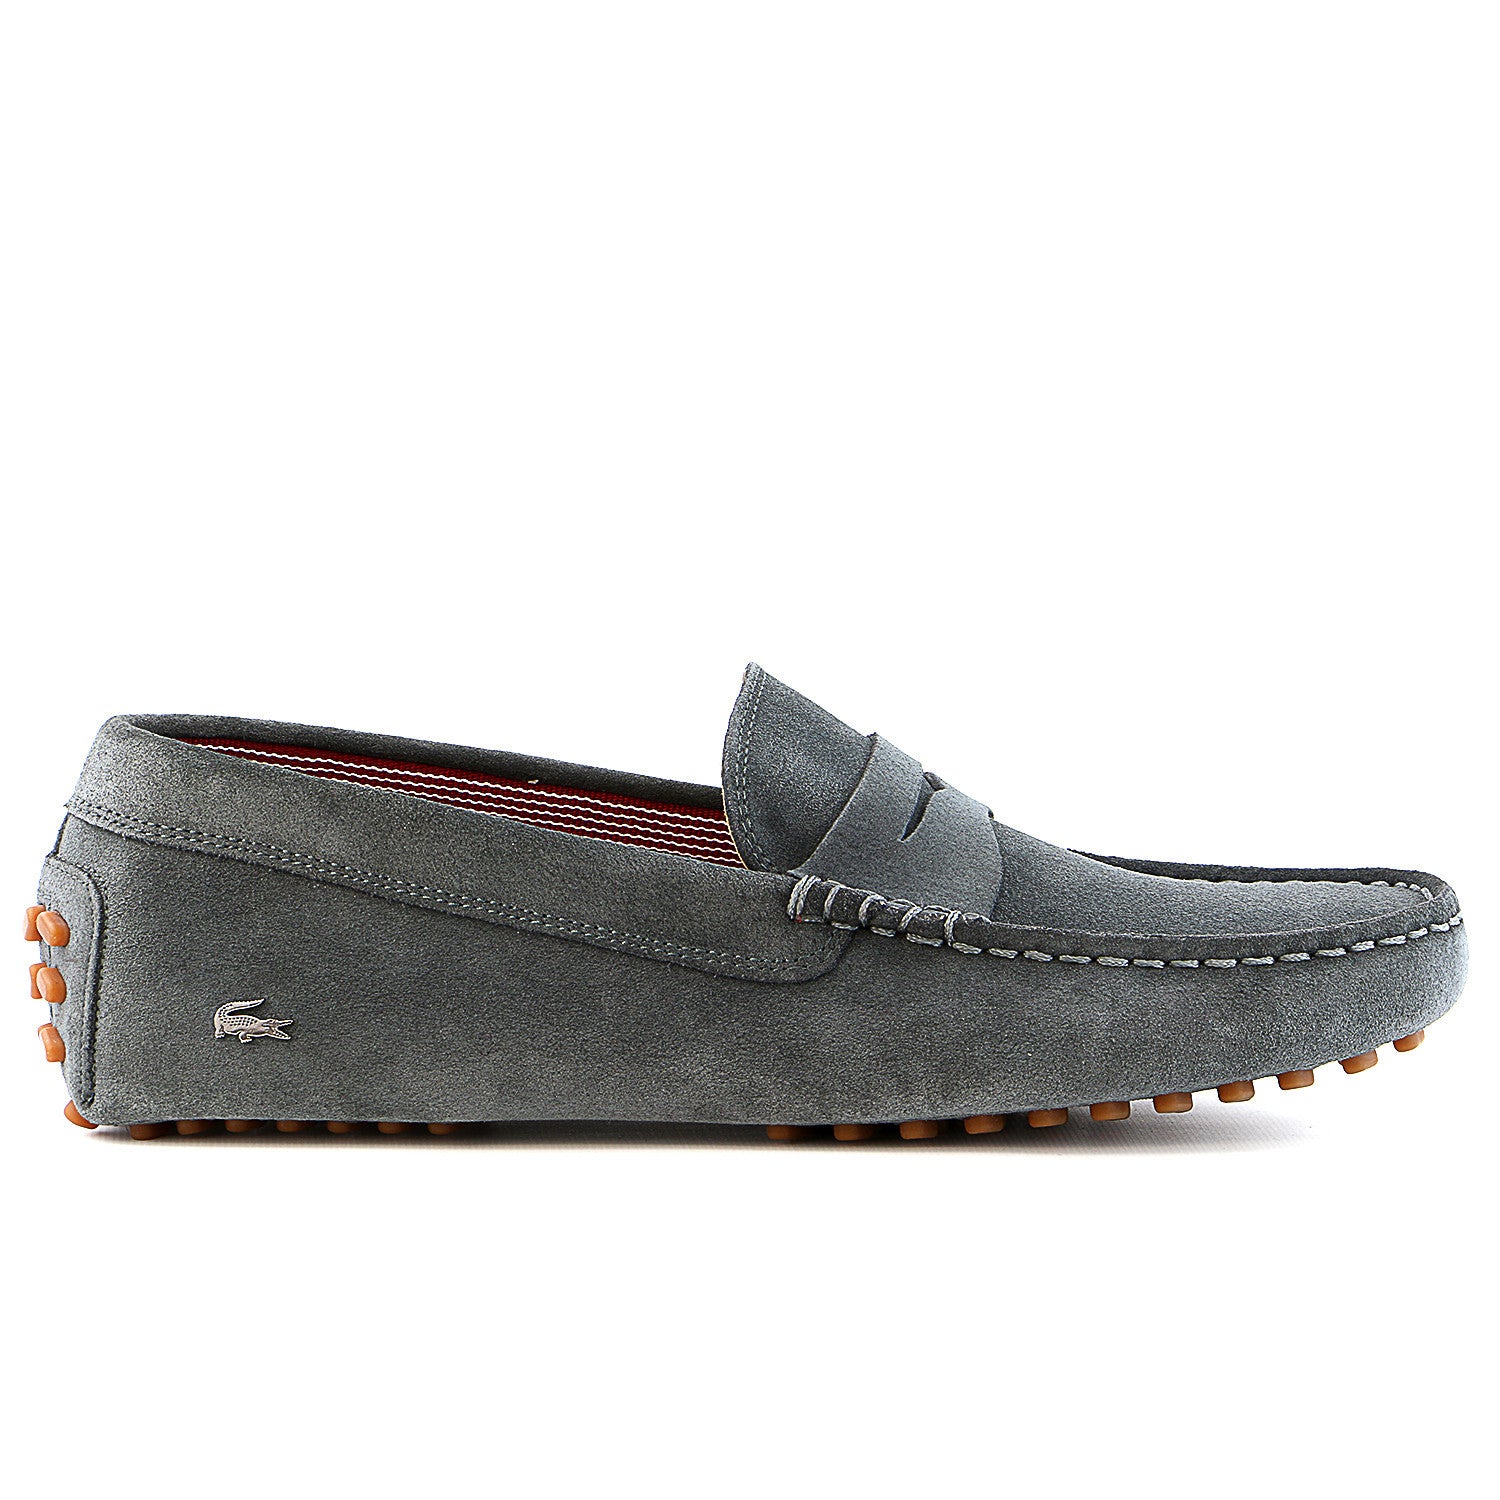 Lacoste Concours 17 SRM Suede Moccasin Loafer Shoe Dark Grey - Mens Shoplifestyle